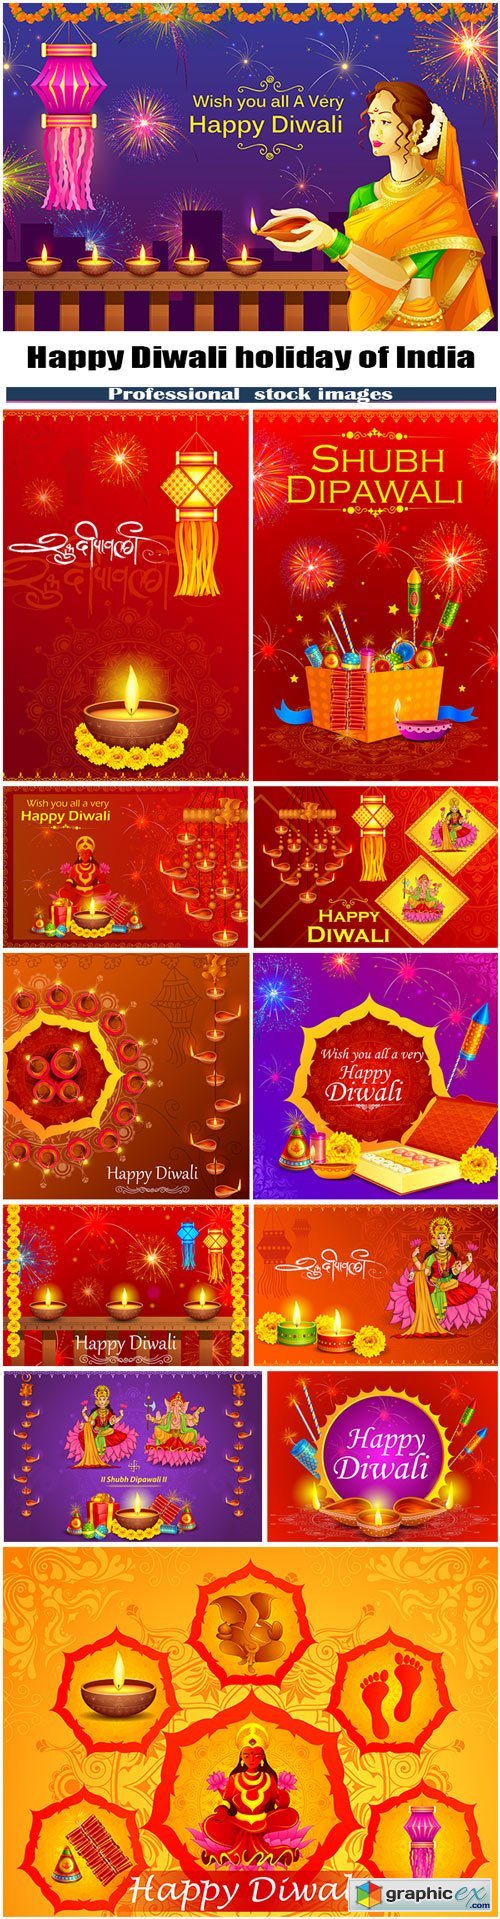 Happy Diwali holiday of India